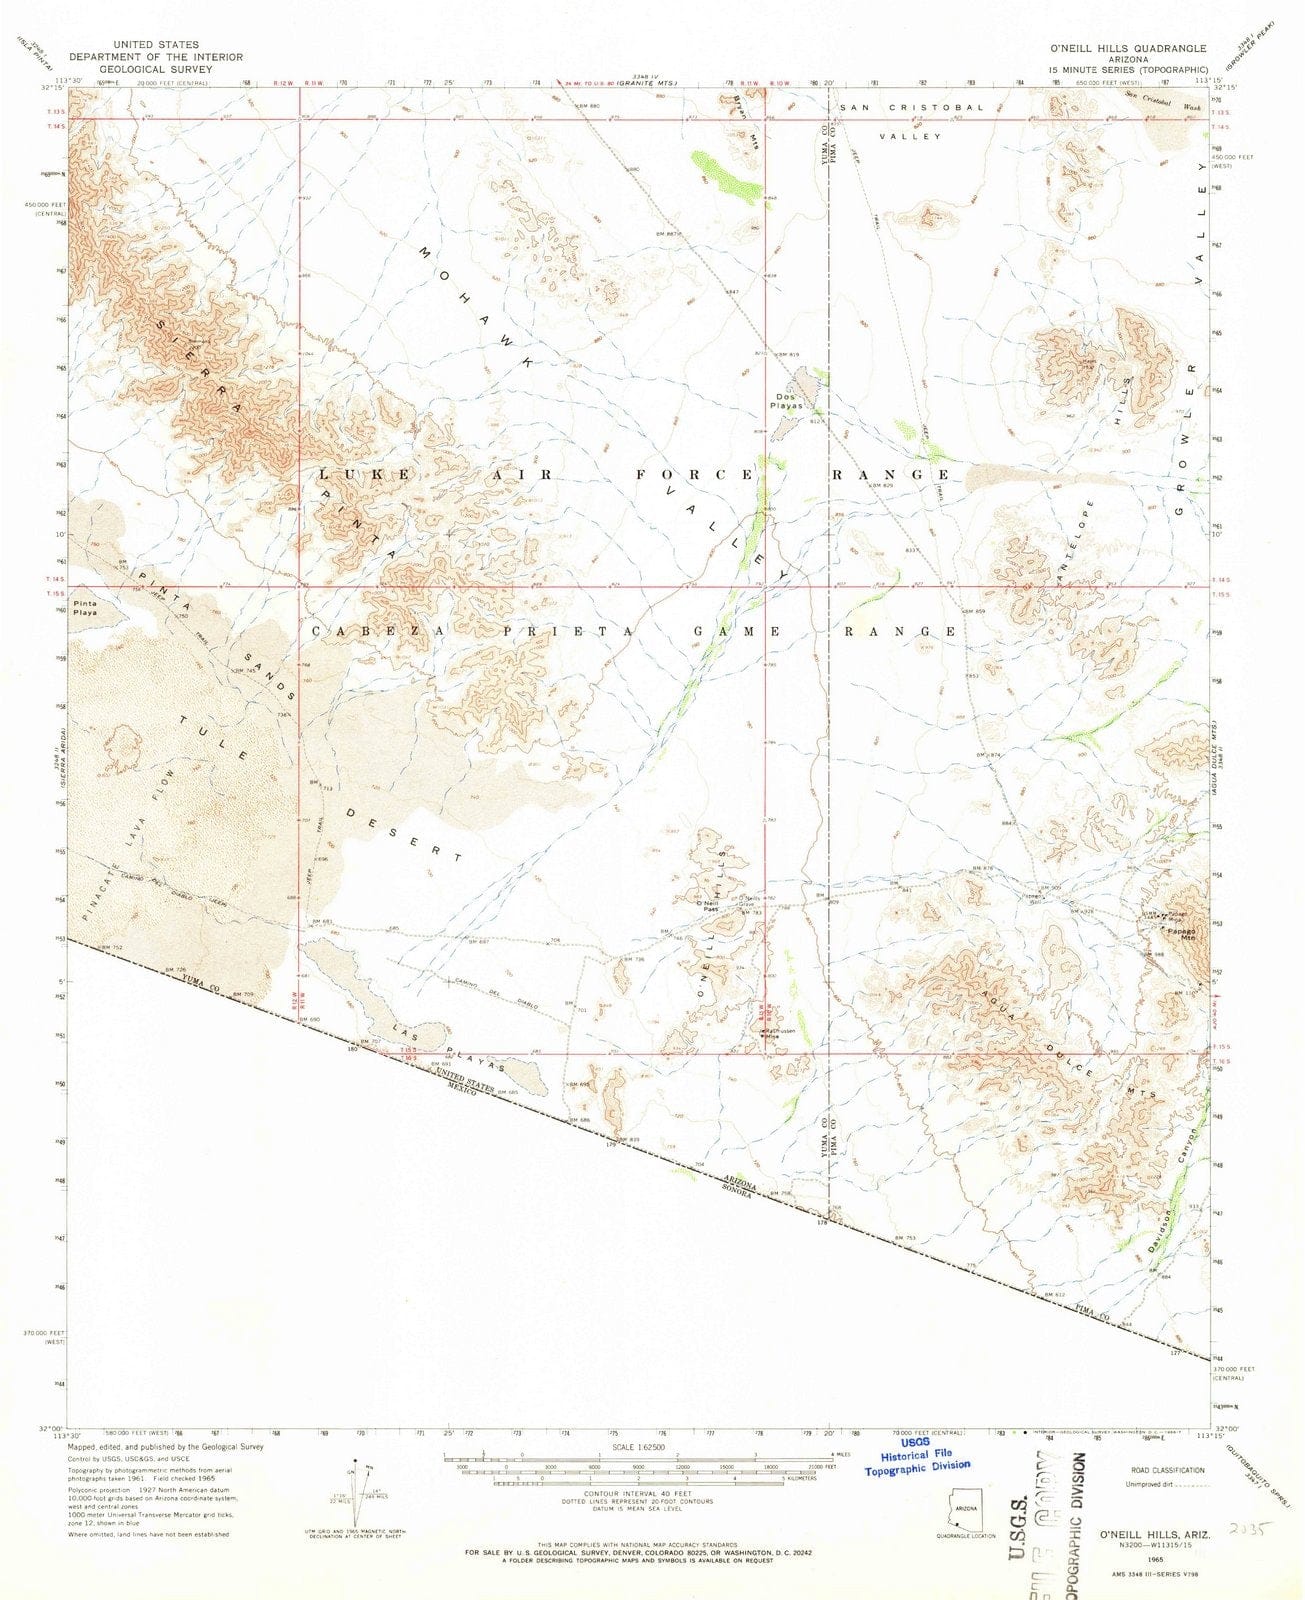 1965 O'Neill Hills, AZ - Arizona - USGS Topographic Map